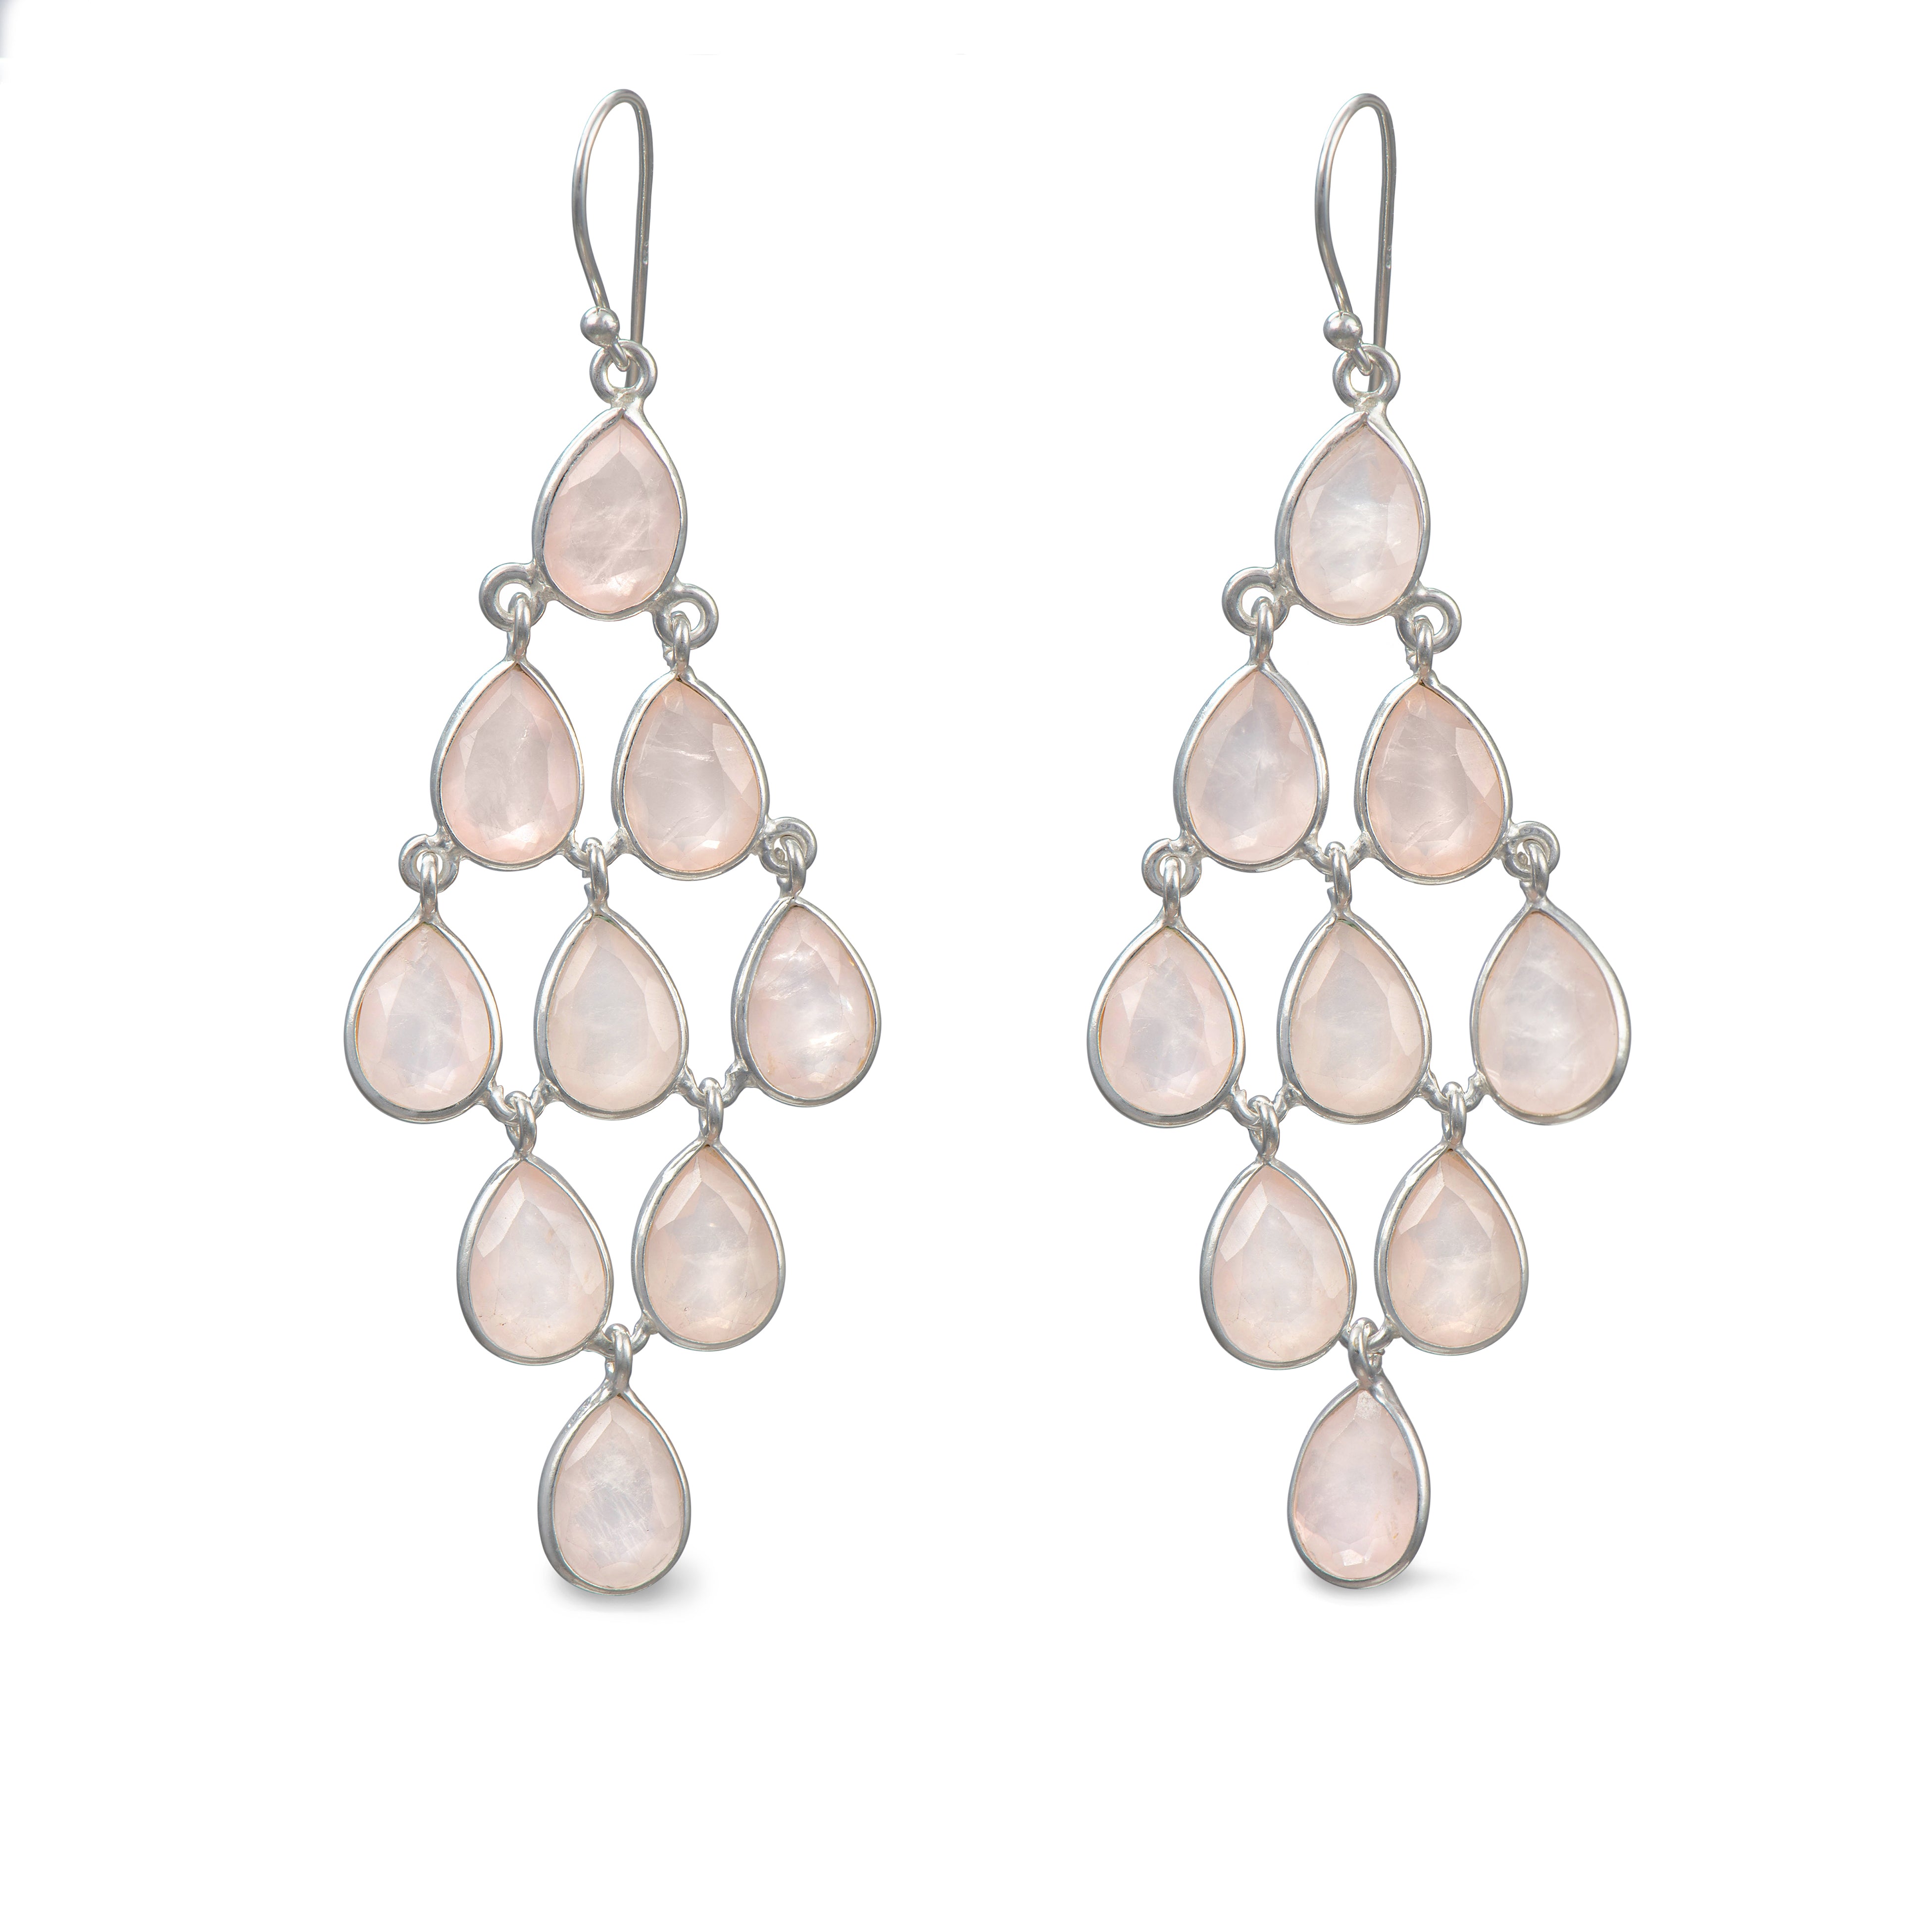 Sterling Silver Chandelier Earrings with Natural Gemstones - Rose Quartz